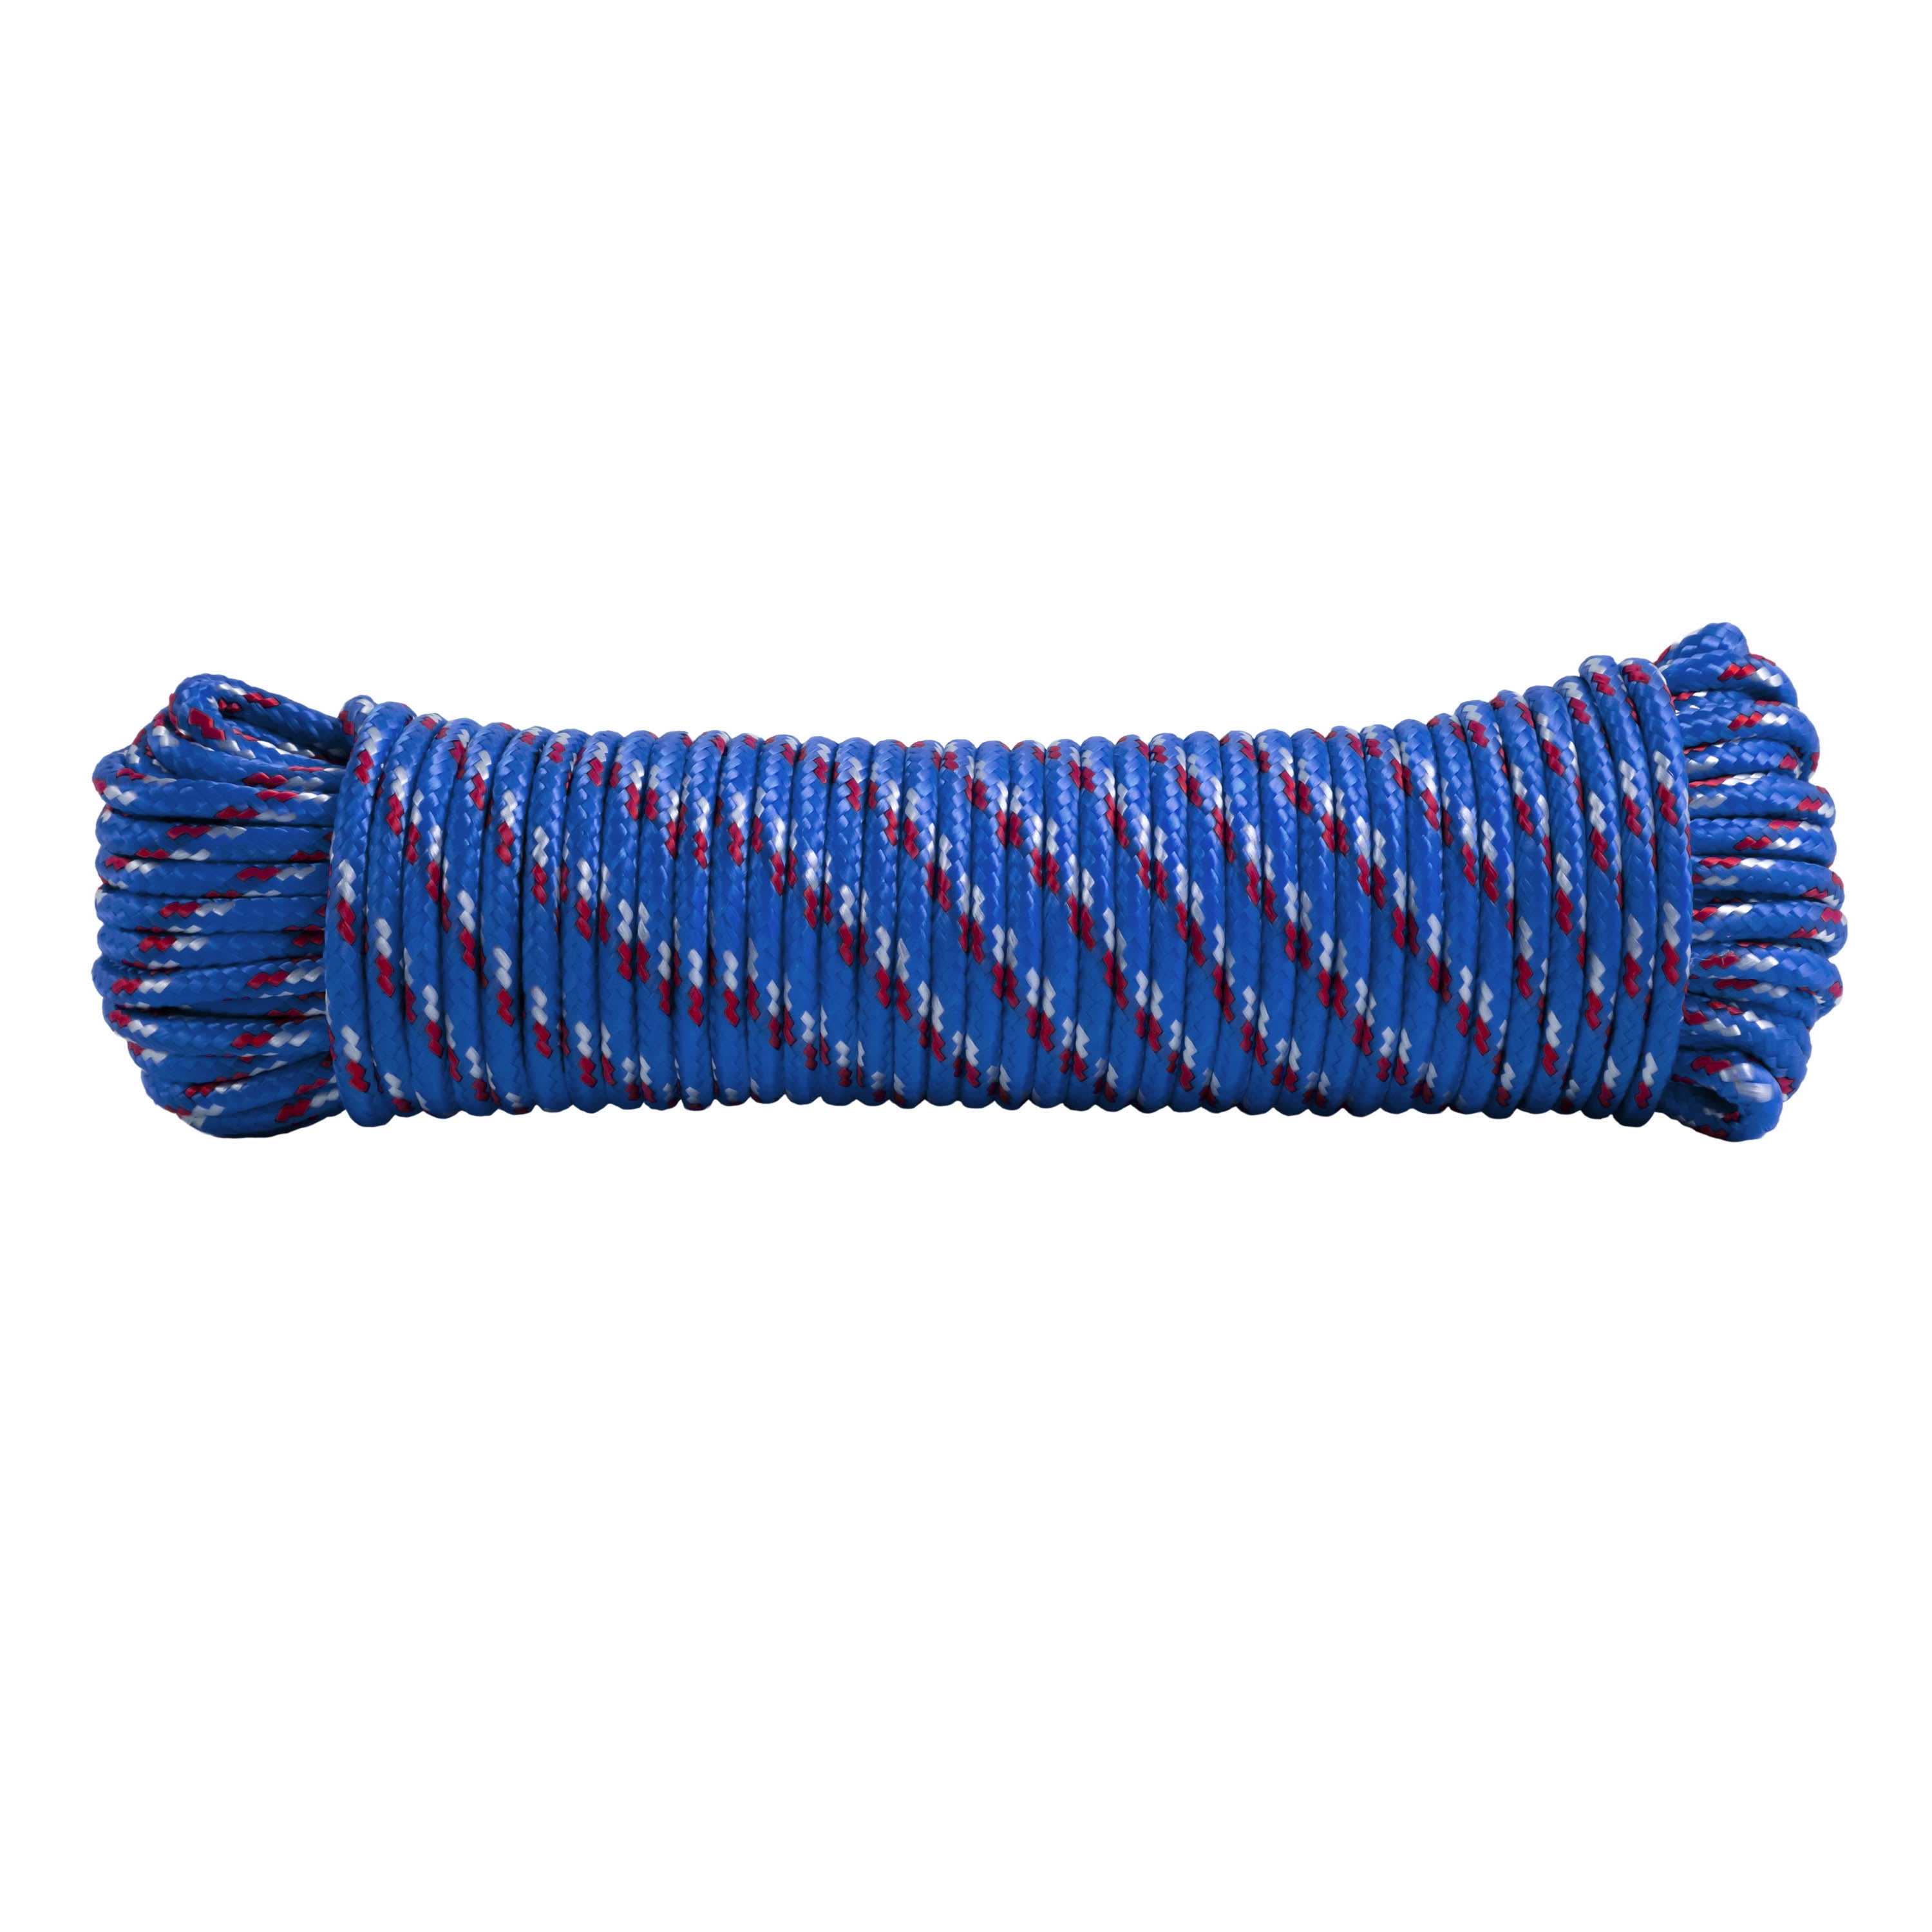 Hyper Tough Polypropylene Diamond Braided Rope, 1/4 inch Diameter x 100' Length, Blue, Size: 1/4 inch x 100